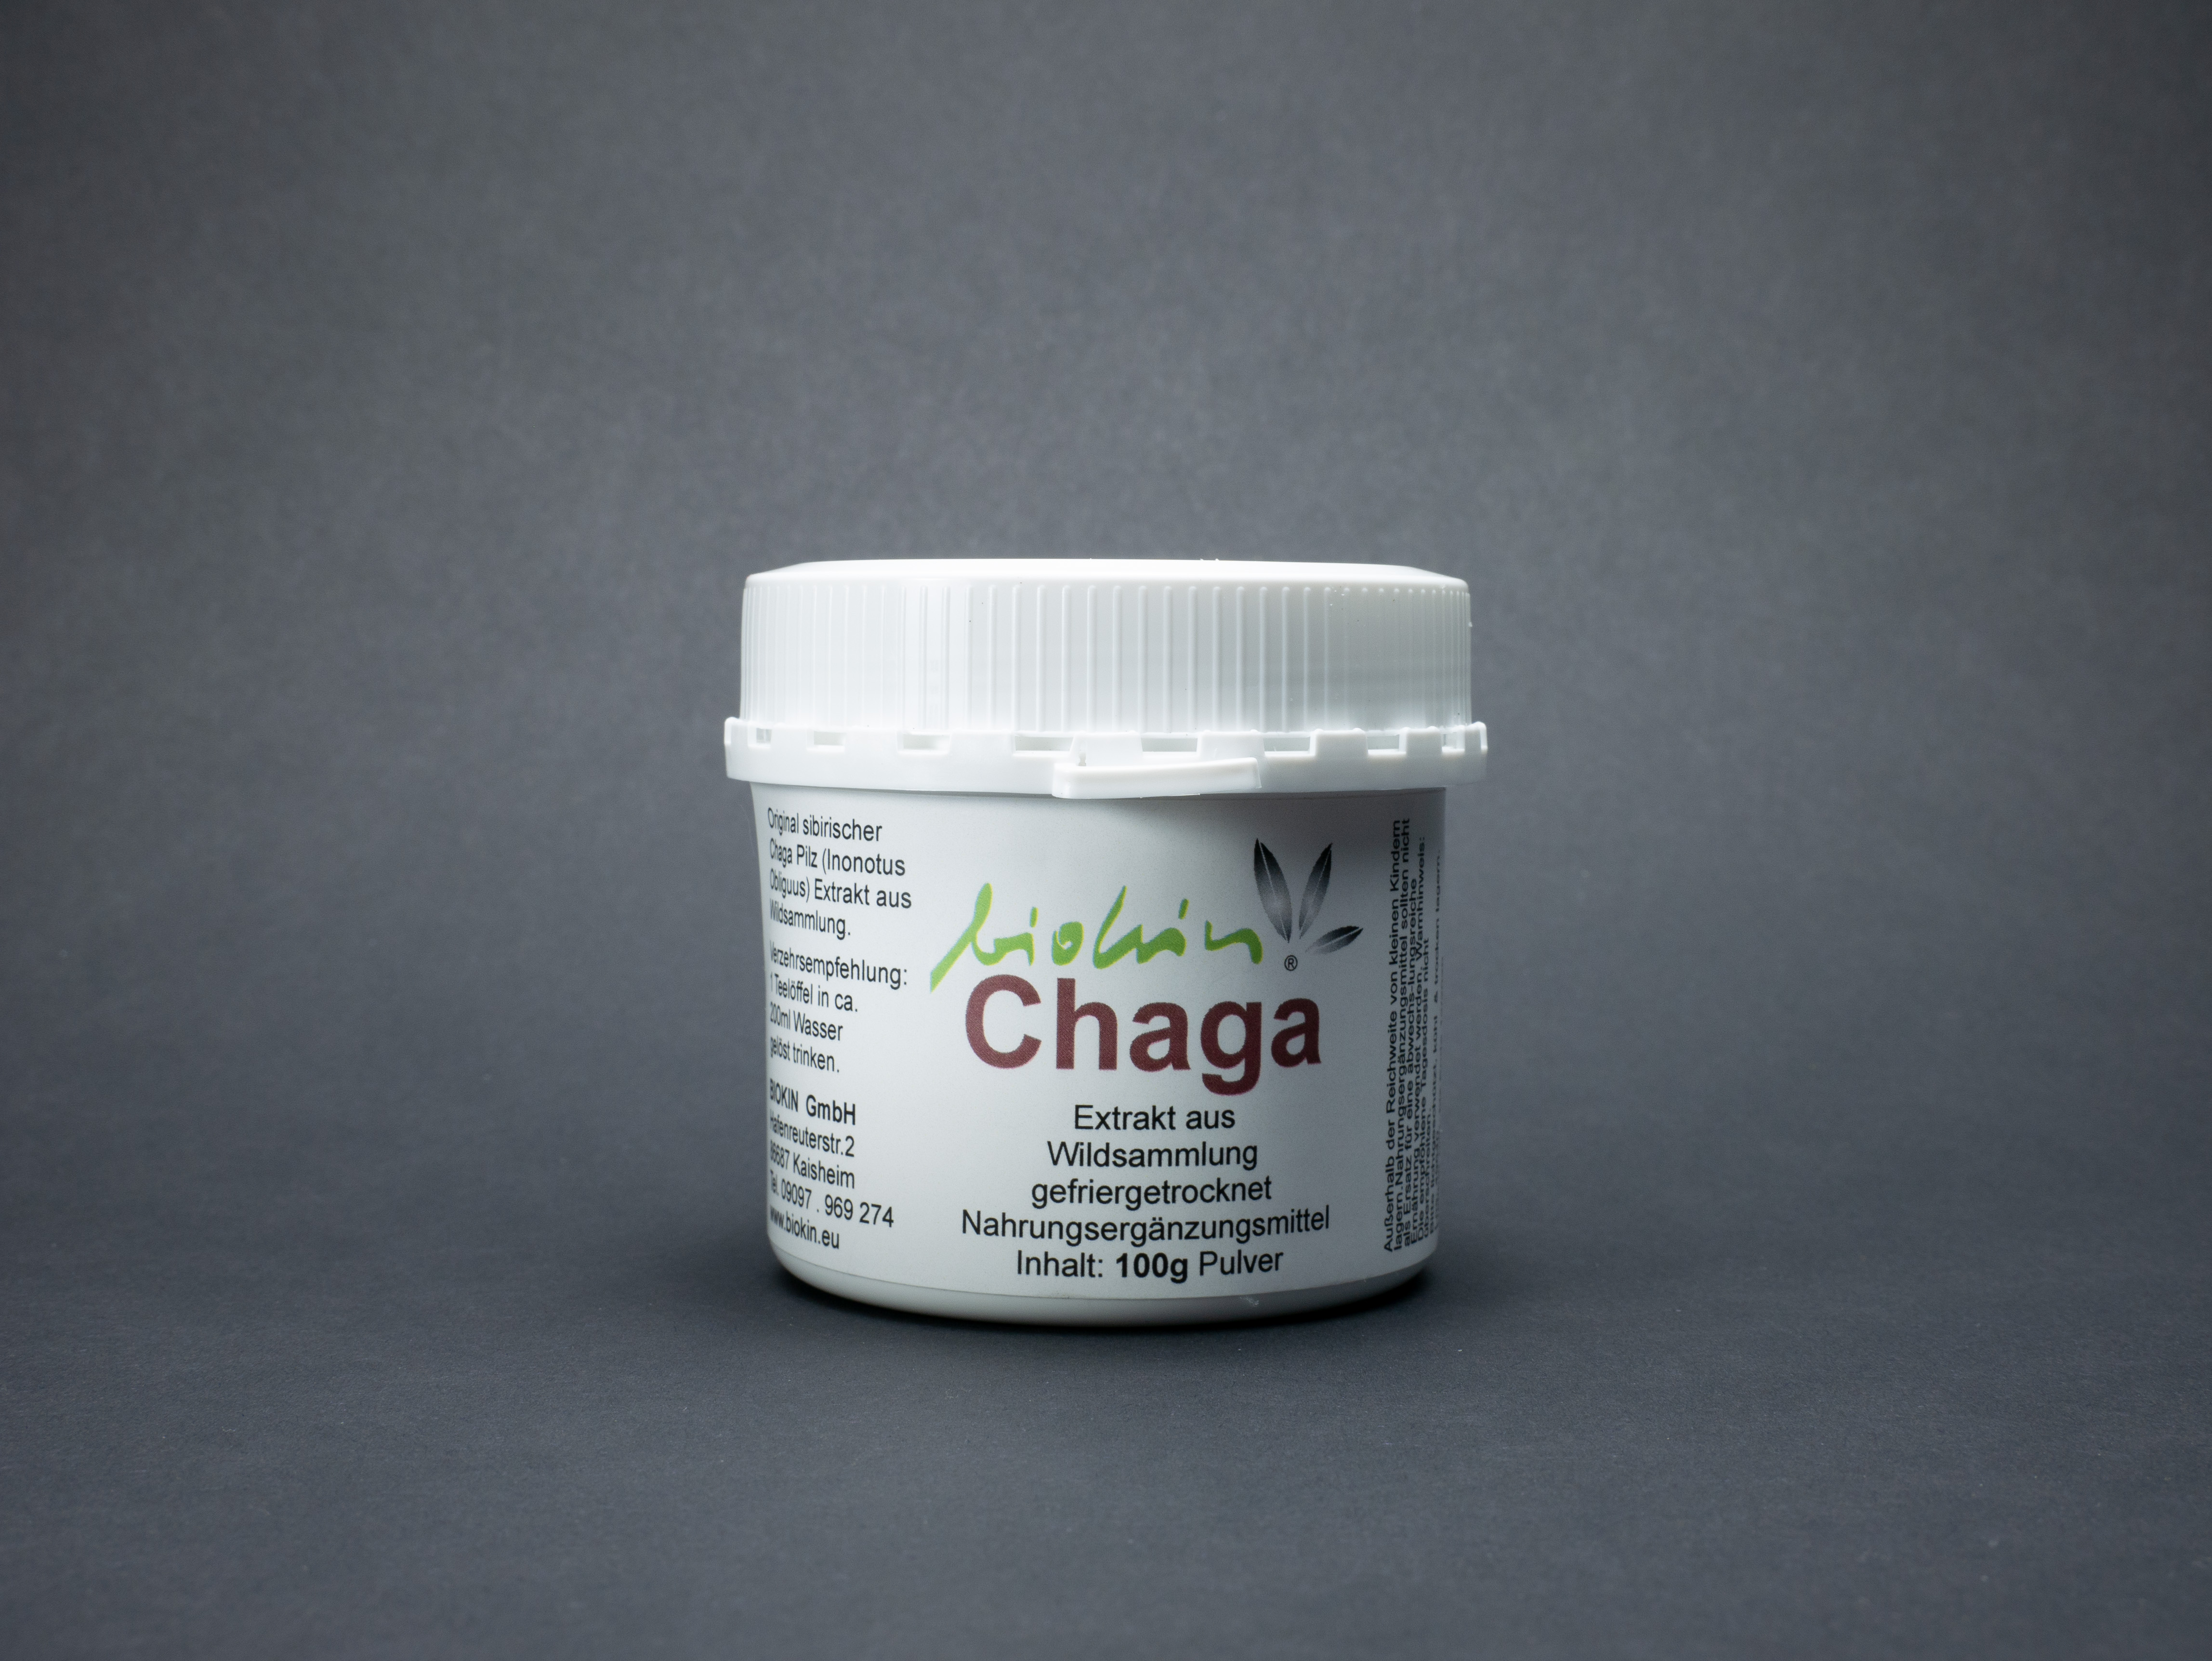 Chaga mushroom extract